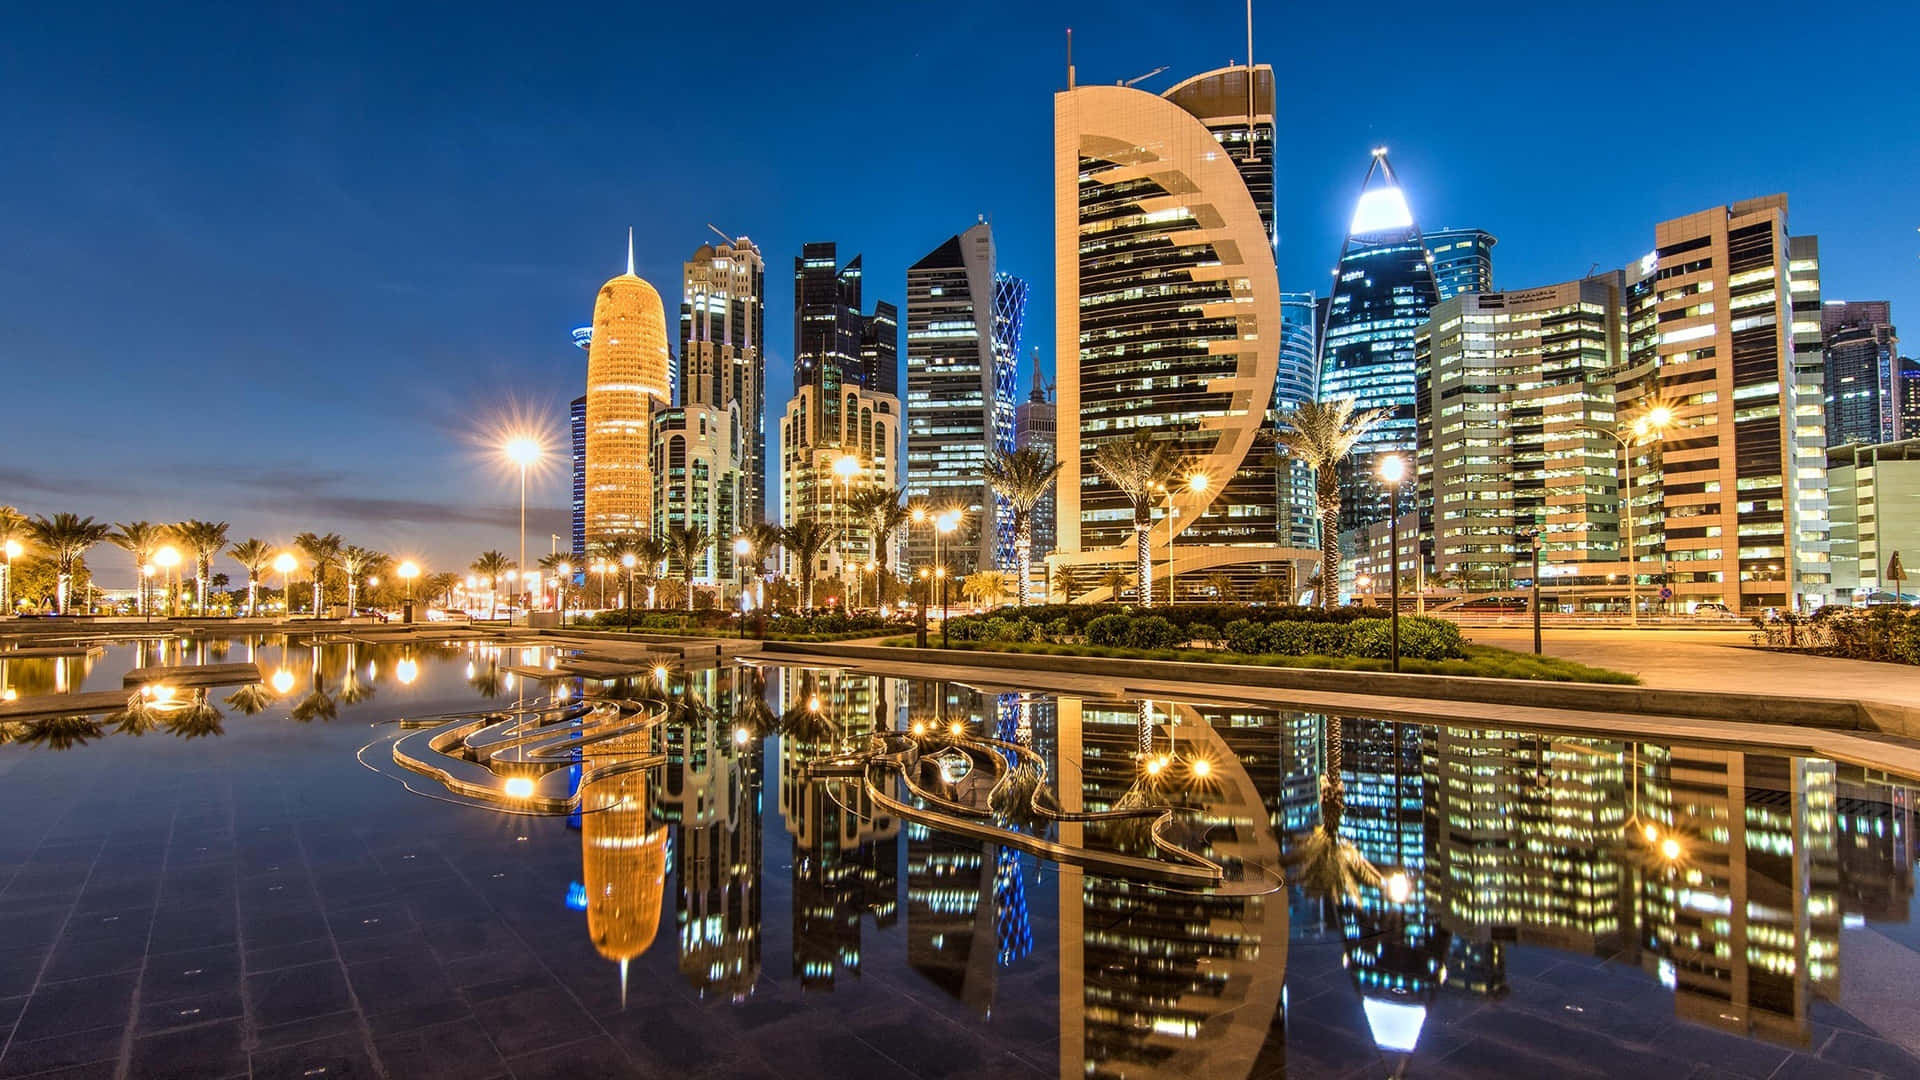 Discover the beautiful skyline of Qatar